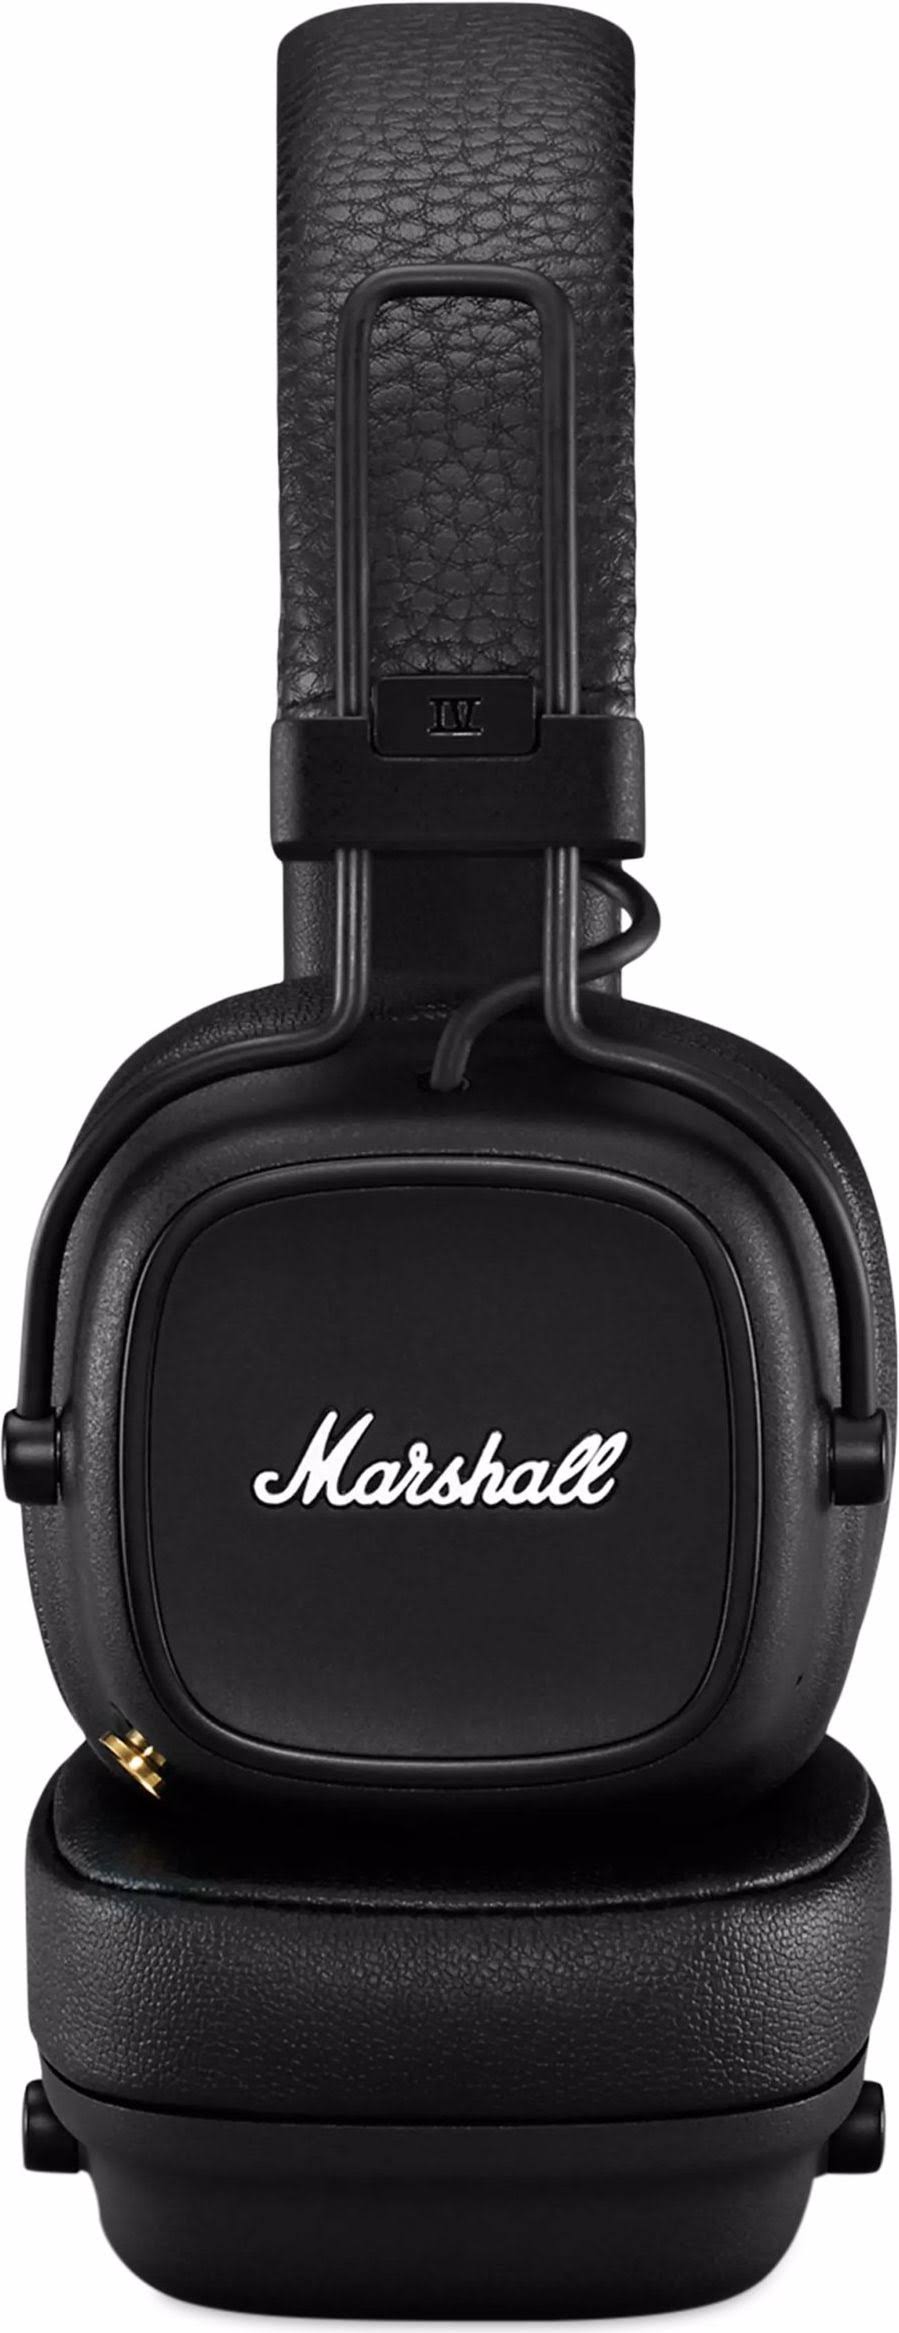 Auriculares inalámbricos Marshall Bluetooth Major IV negro